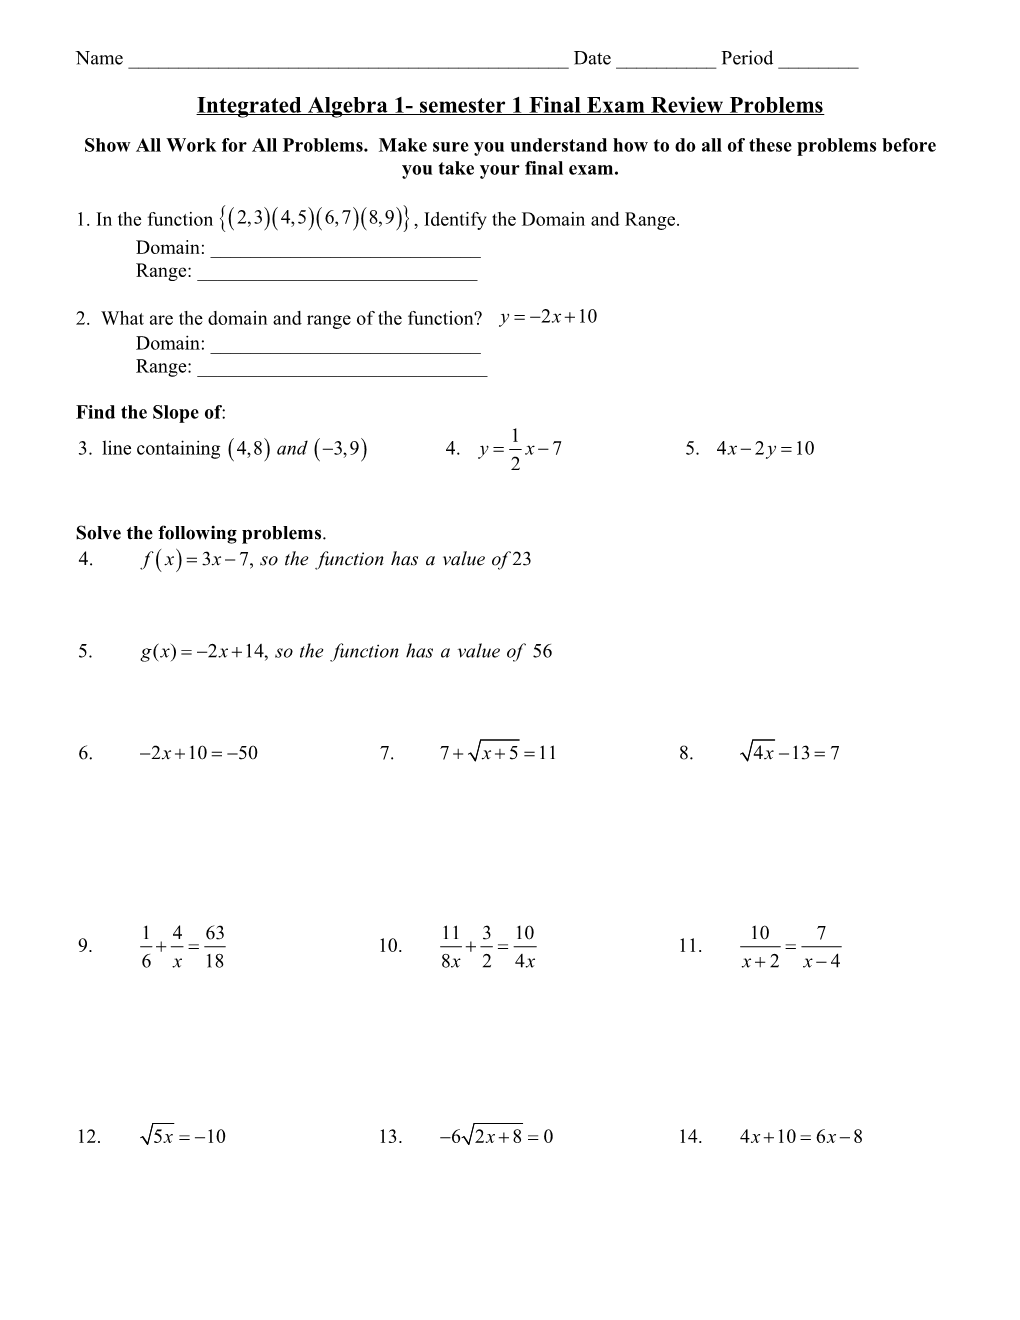 Integrated Algebra 1- Semester 1 Final Exam Review Problems